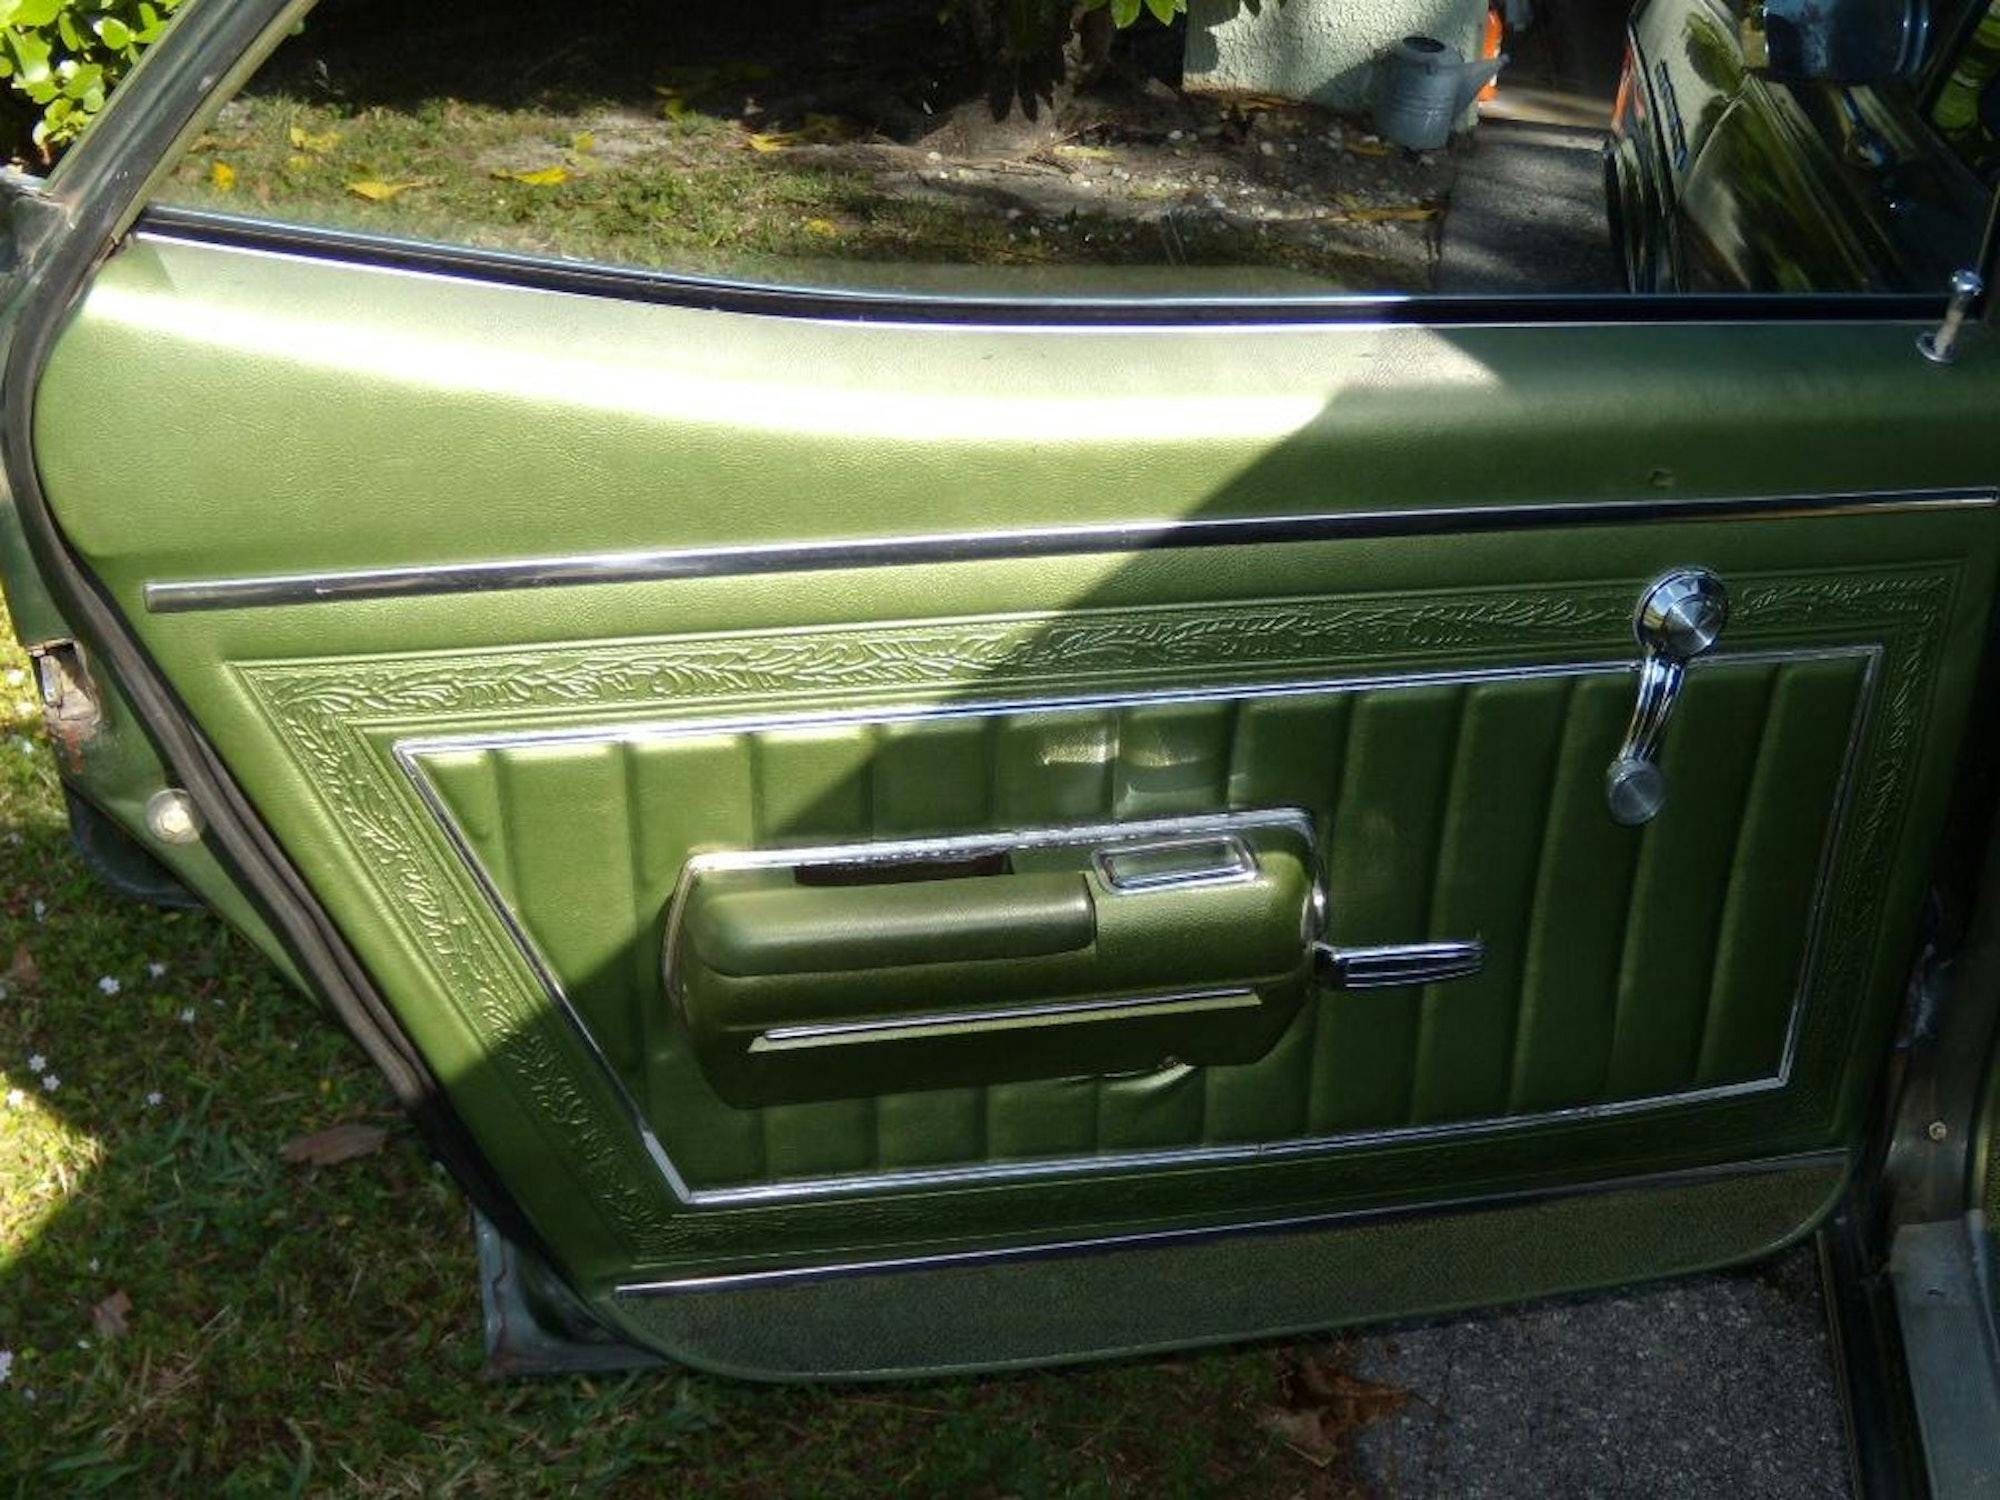 1969 Buick Sportwagon 400 wagon vintage green